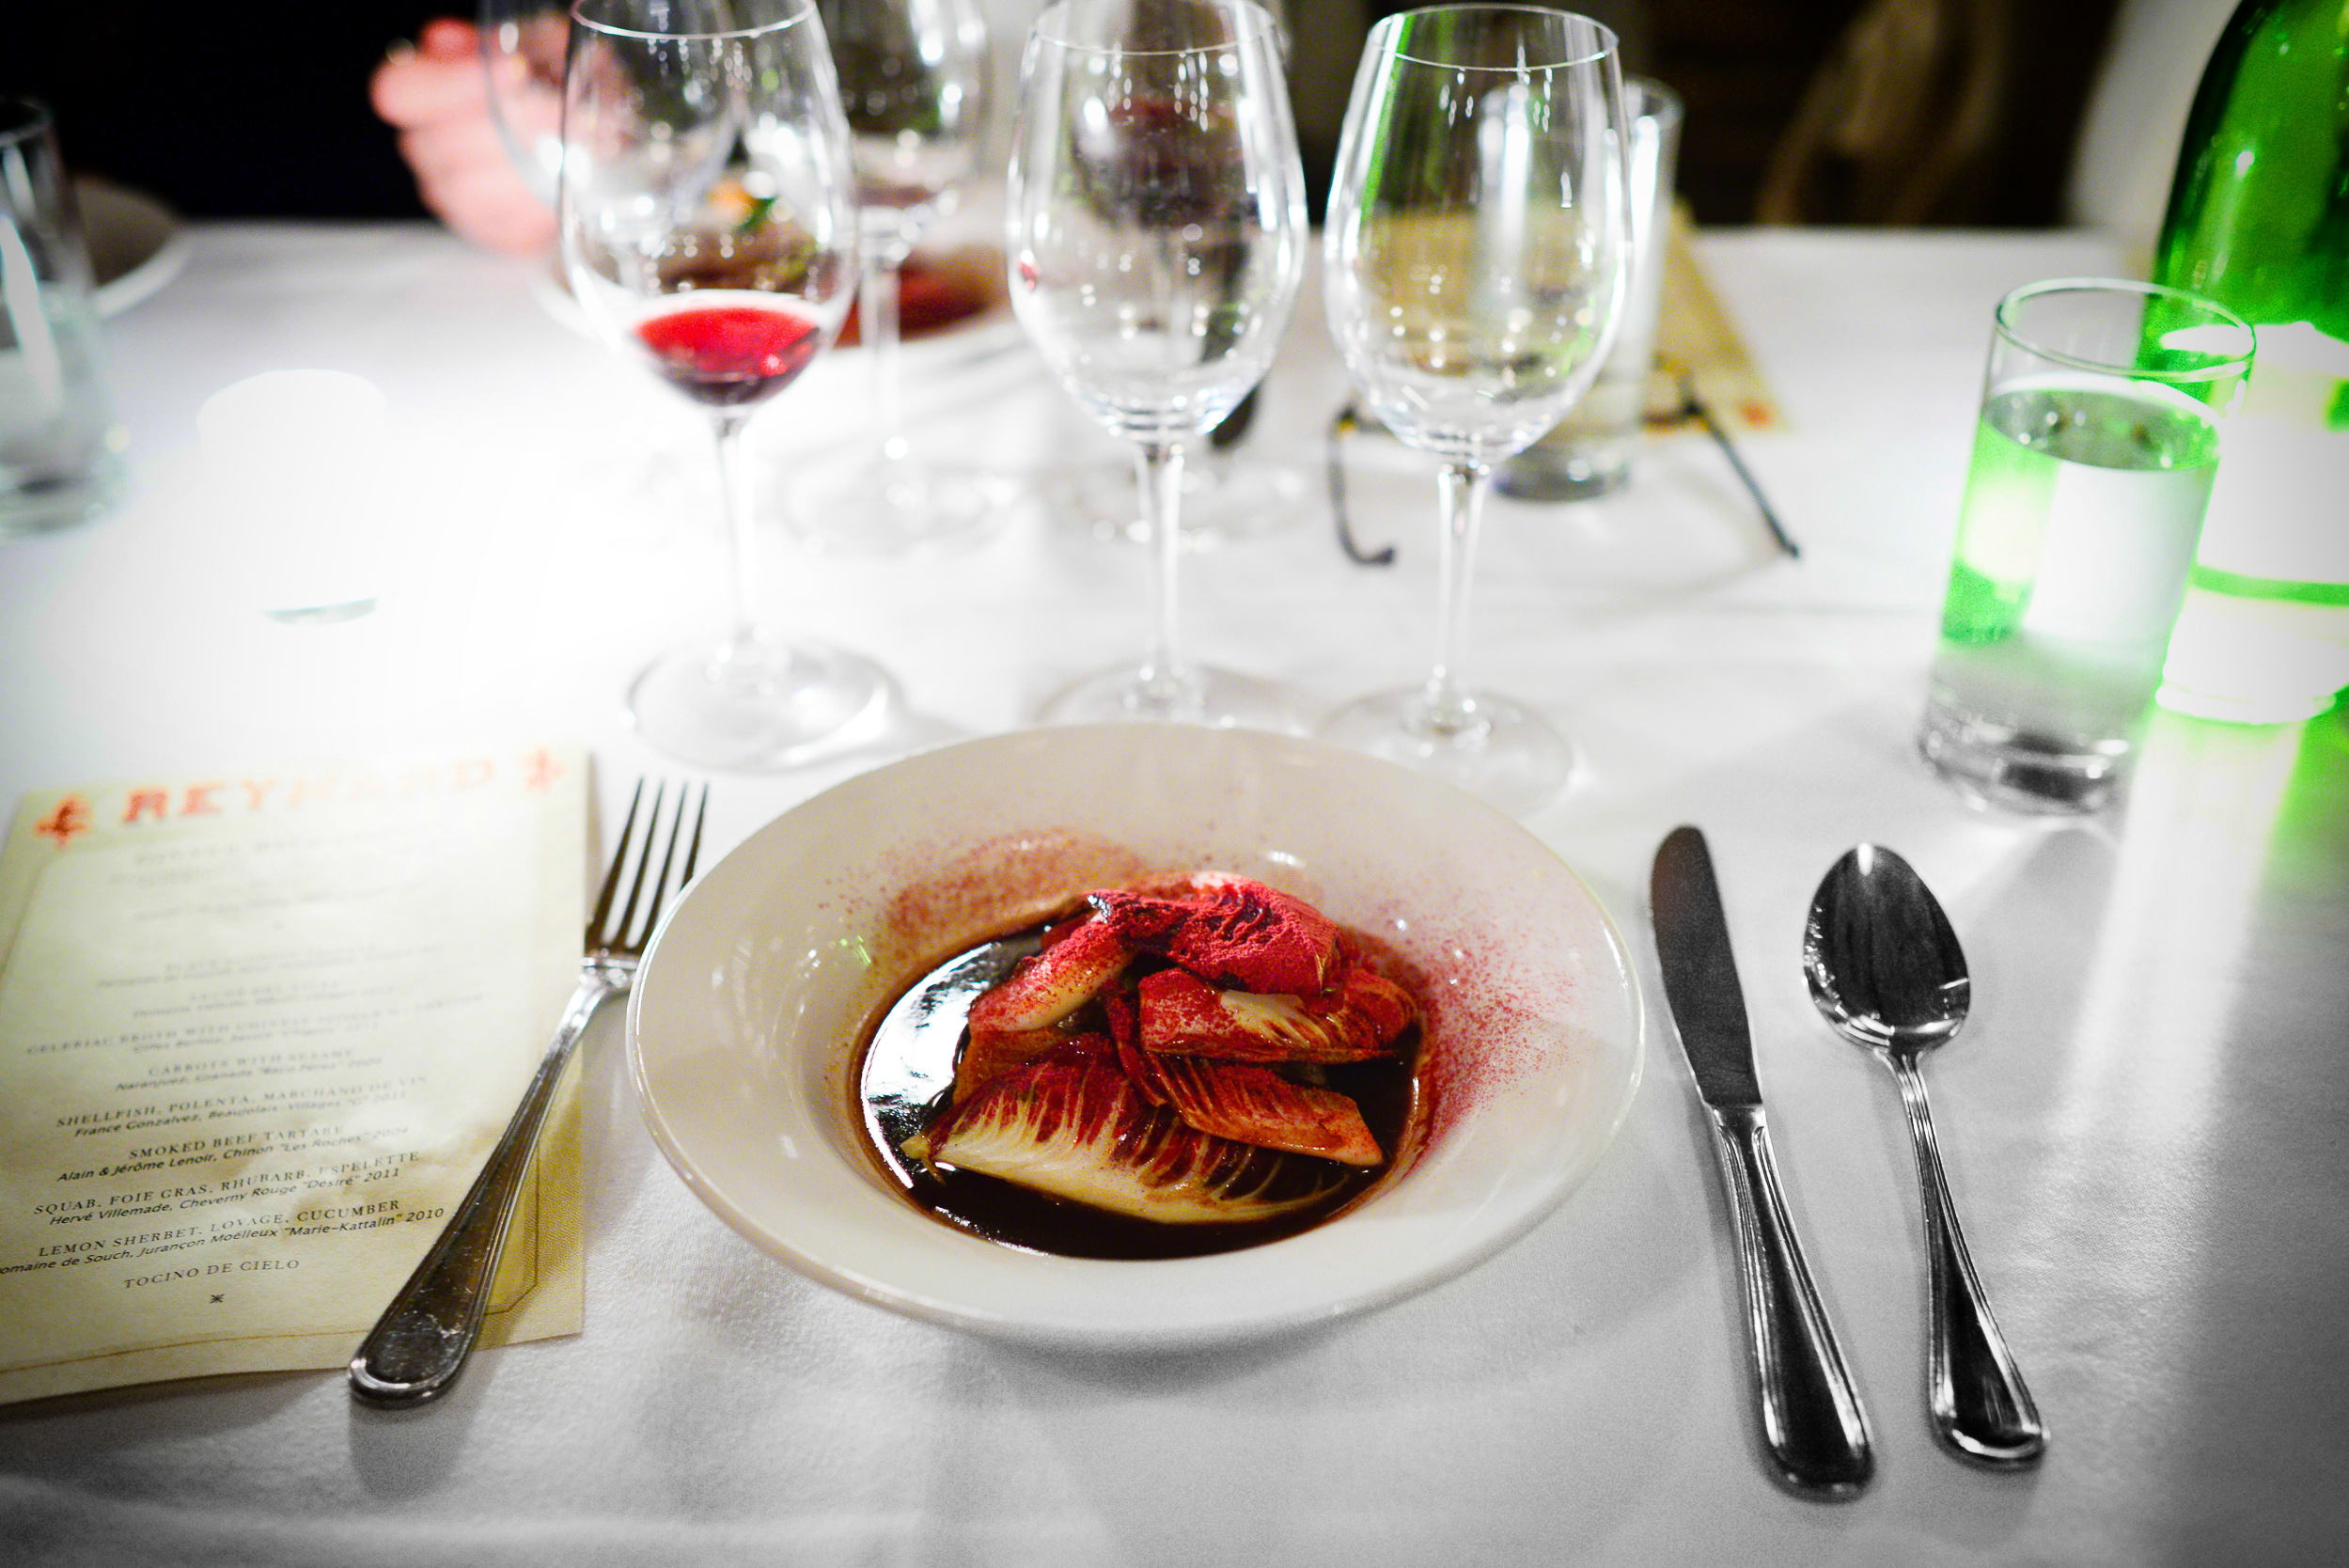 5th Course: Shellfish, polenta, marchand de vin